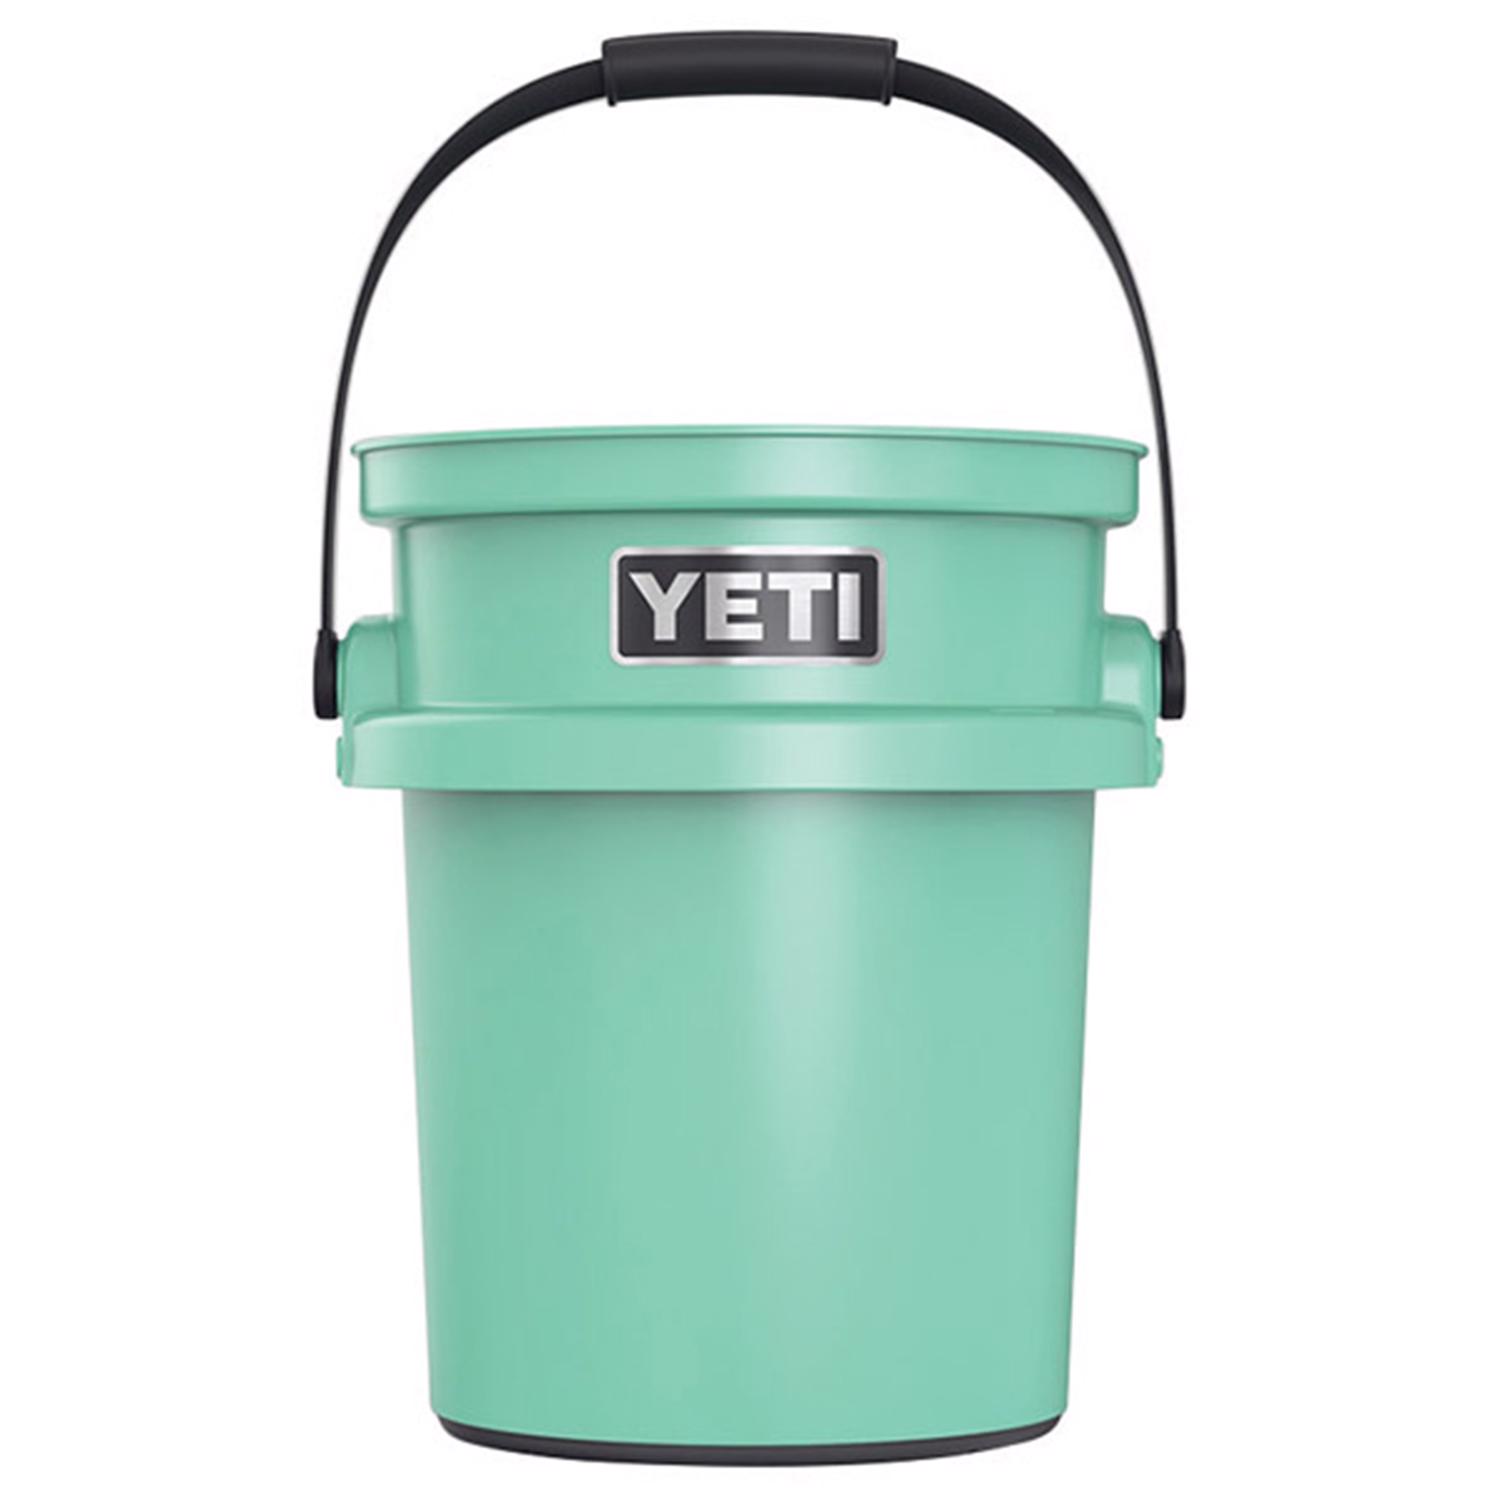 YETI Loadout 5-Gallon Bucket, Impact Resistant Fishing/Utility